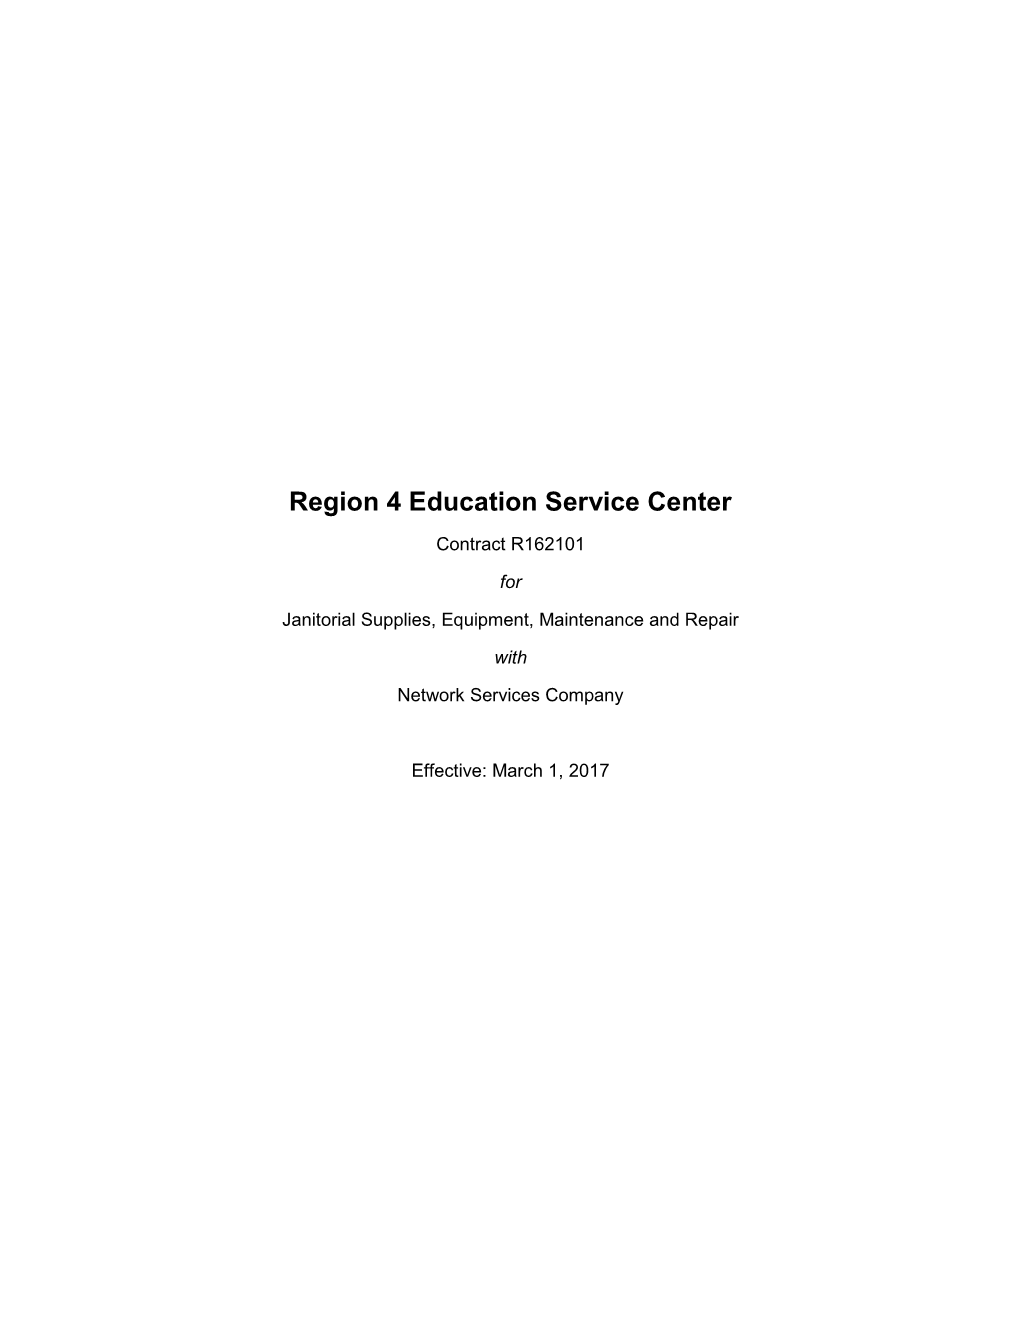 Region 4 Education Service Center Contract R162101